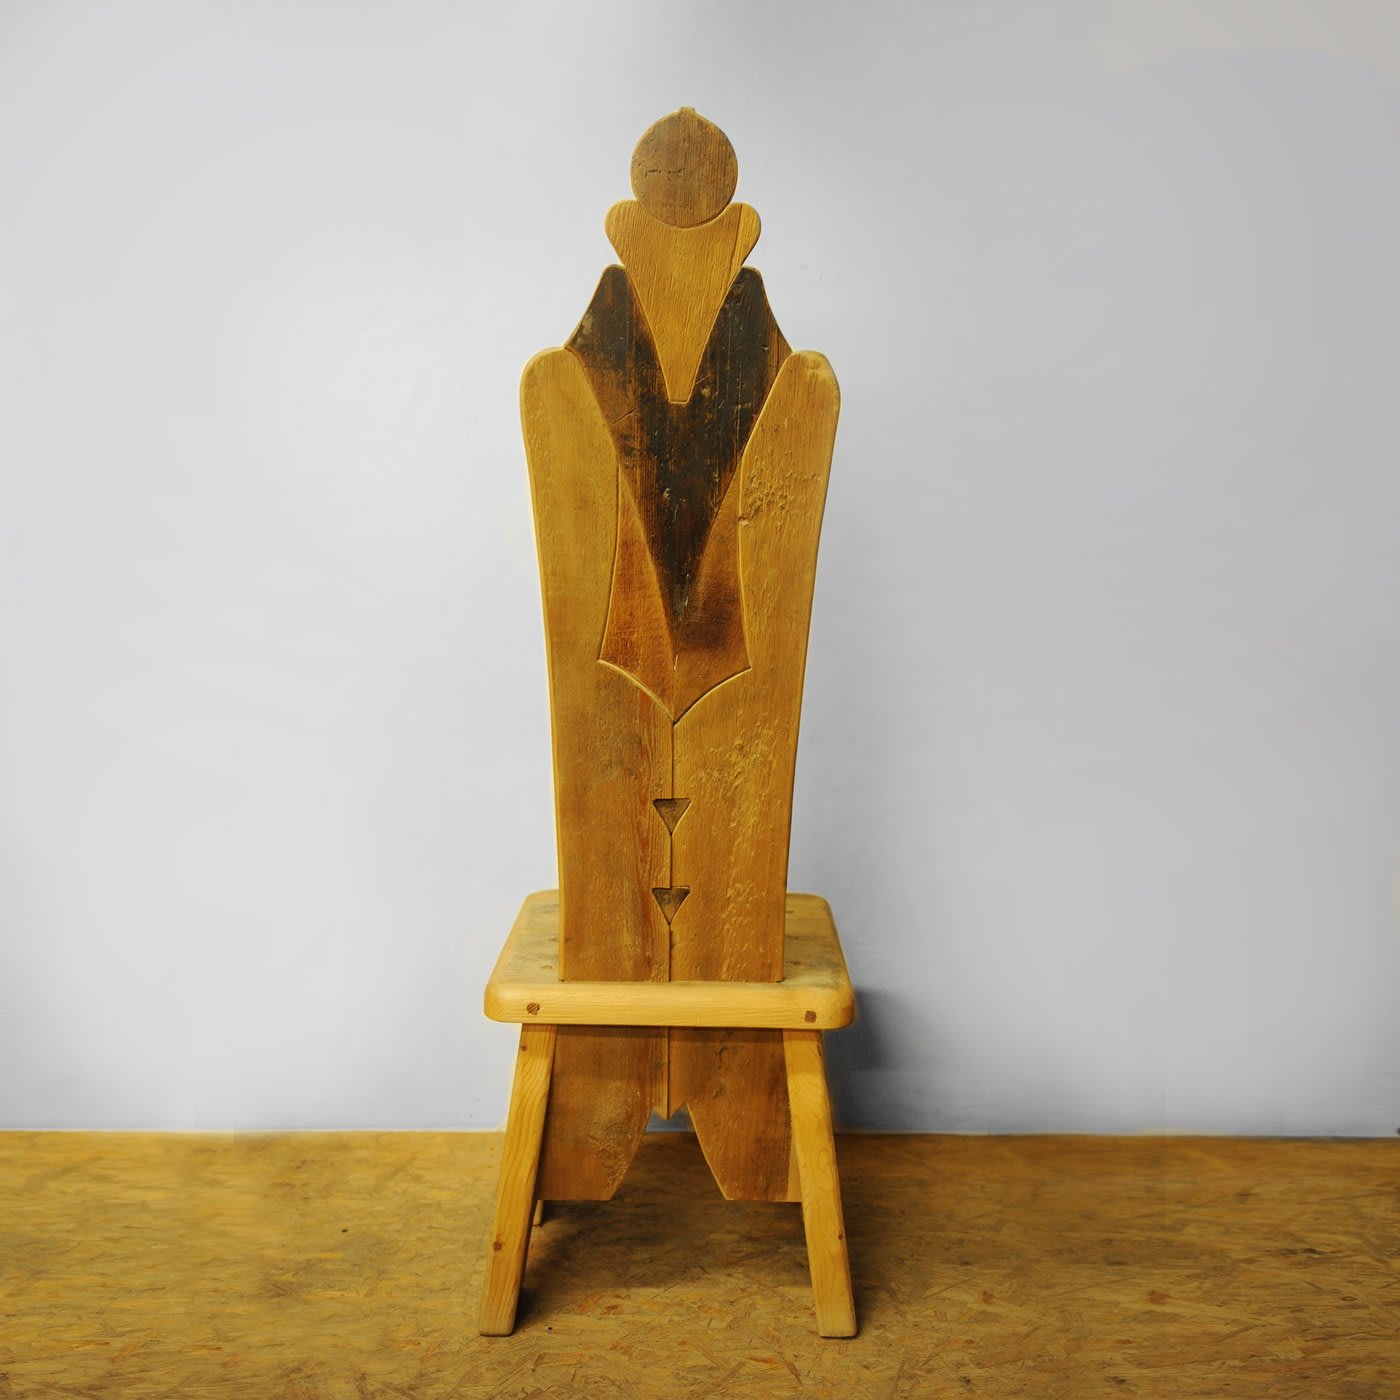 Suit Throne Chair - Falegnameria Helmut Santifaller